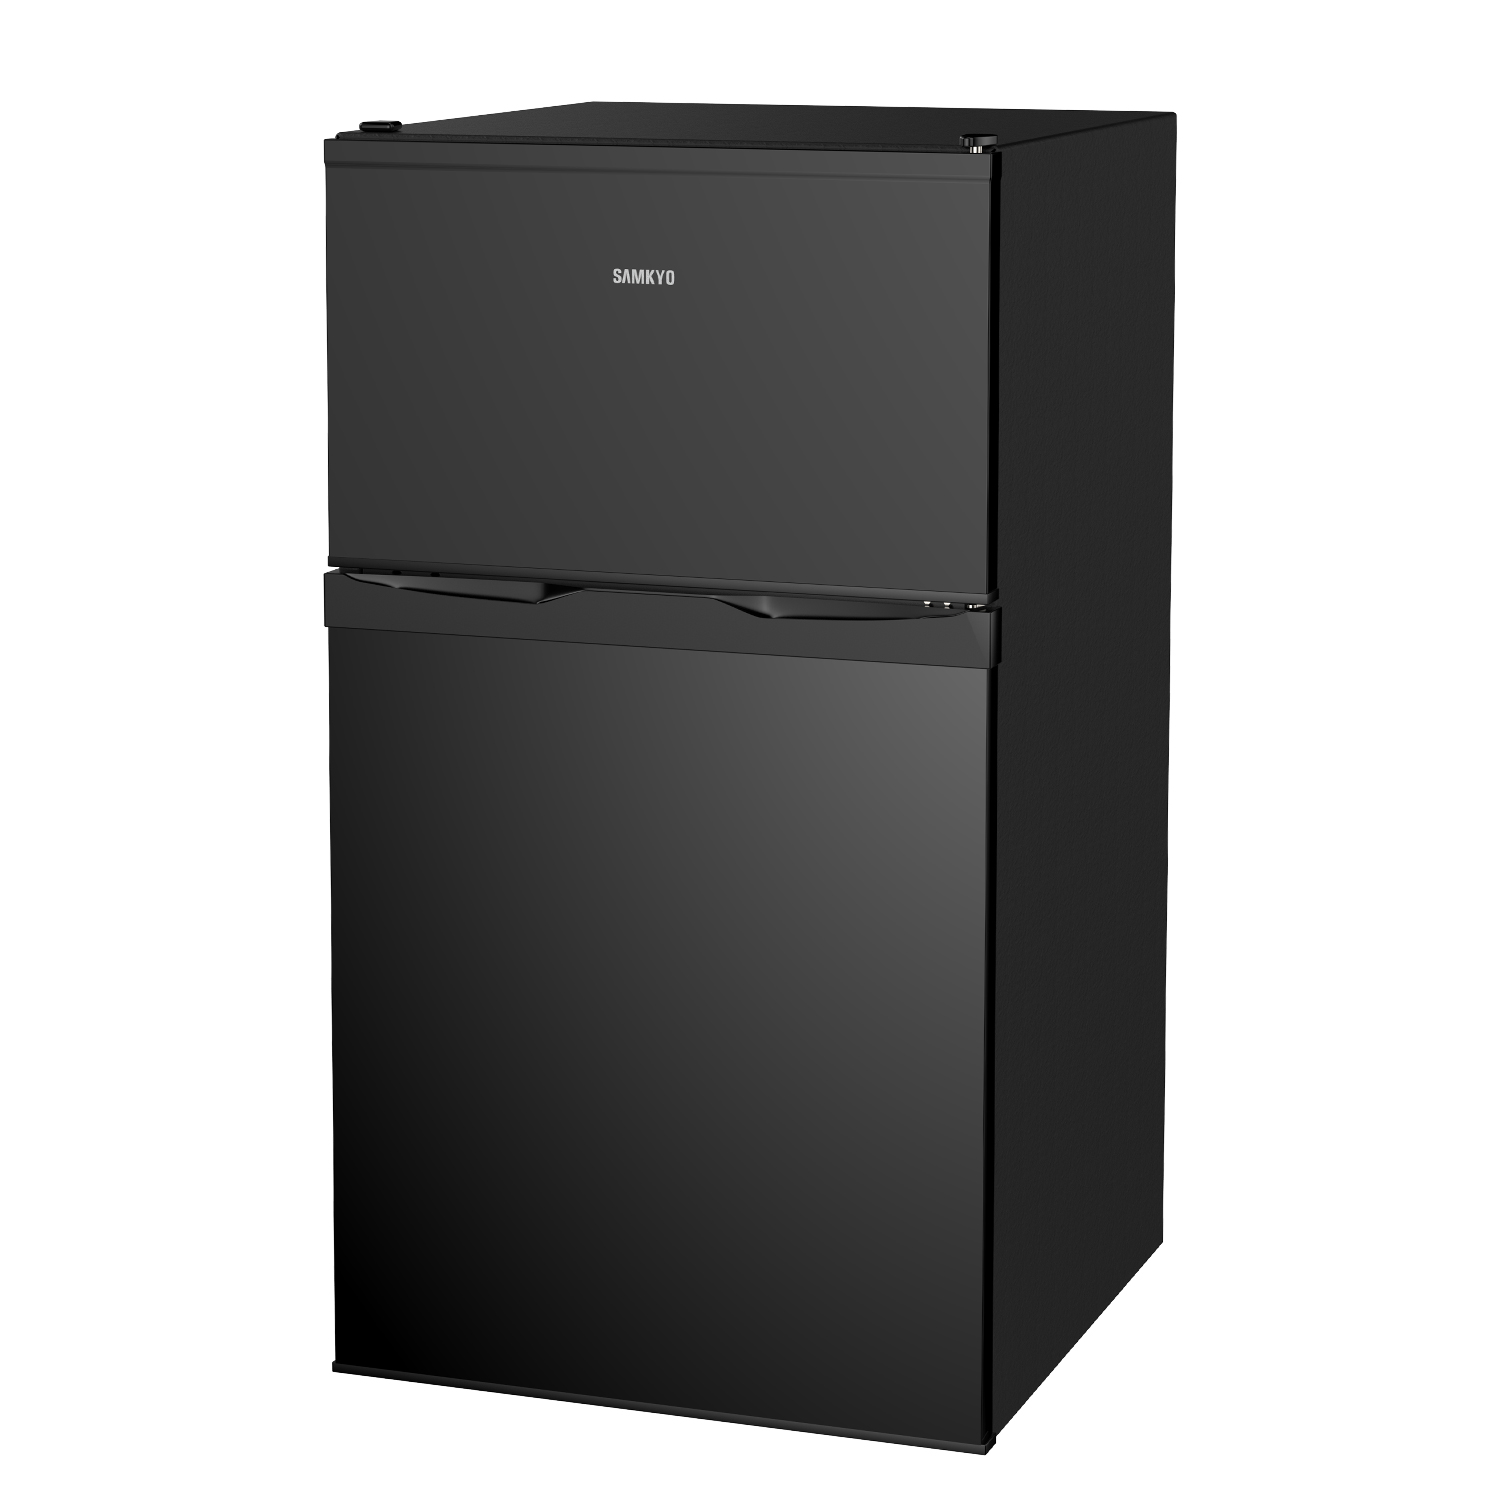 SAMKYO 冷蔵庫 95L 小型 2ドア 耐熱天板 コンパクト 左右開き対応 一人暮らし 静音 ホワイト GU90